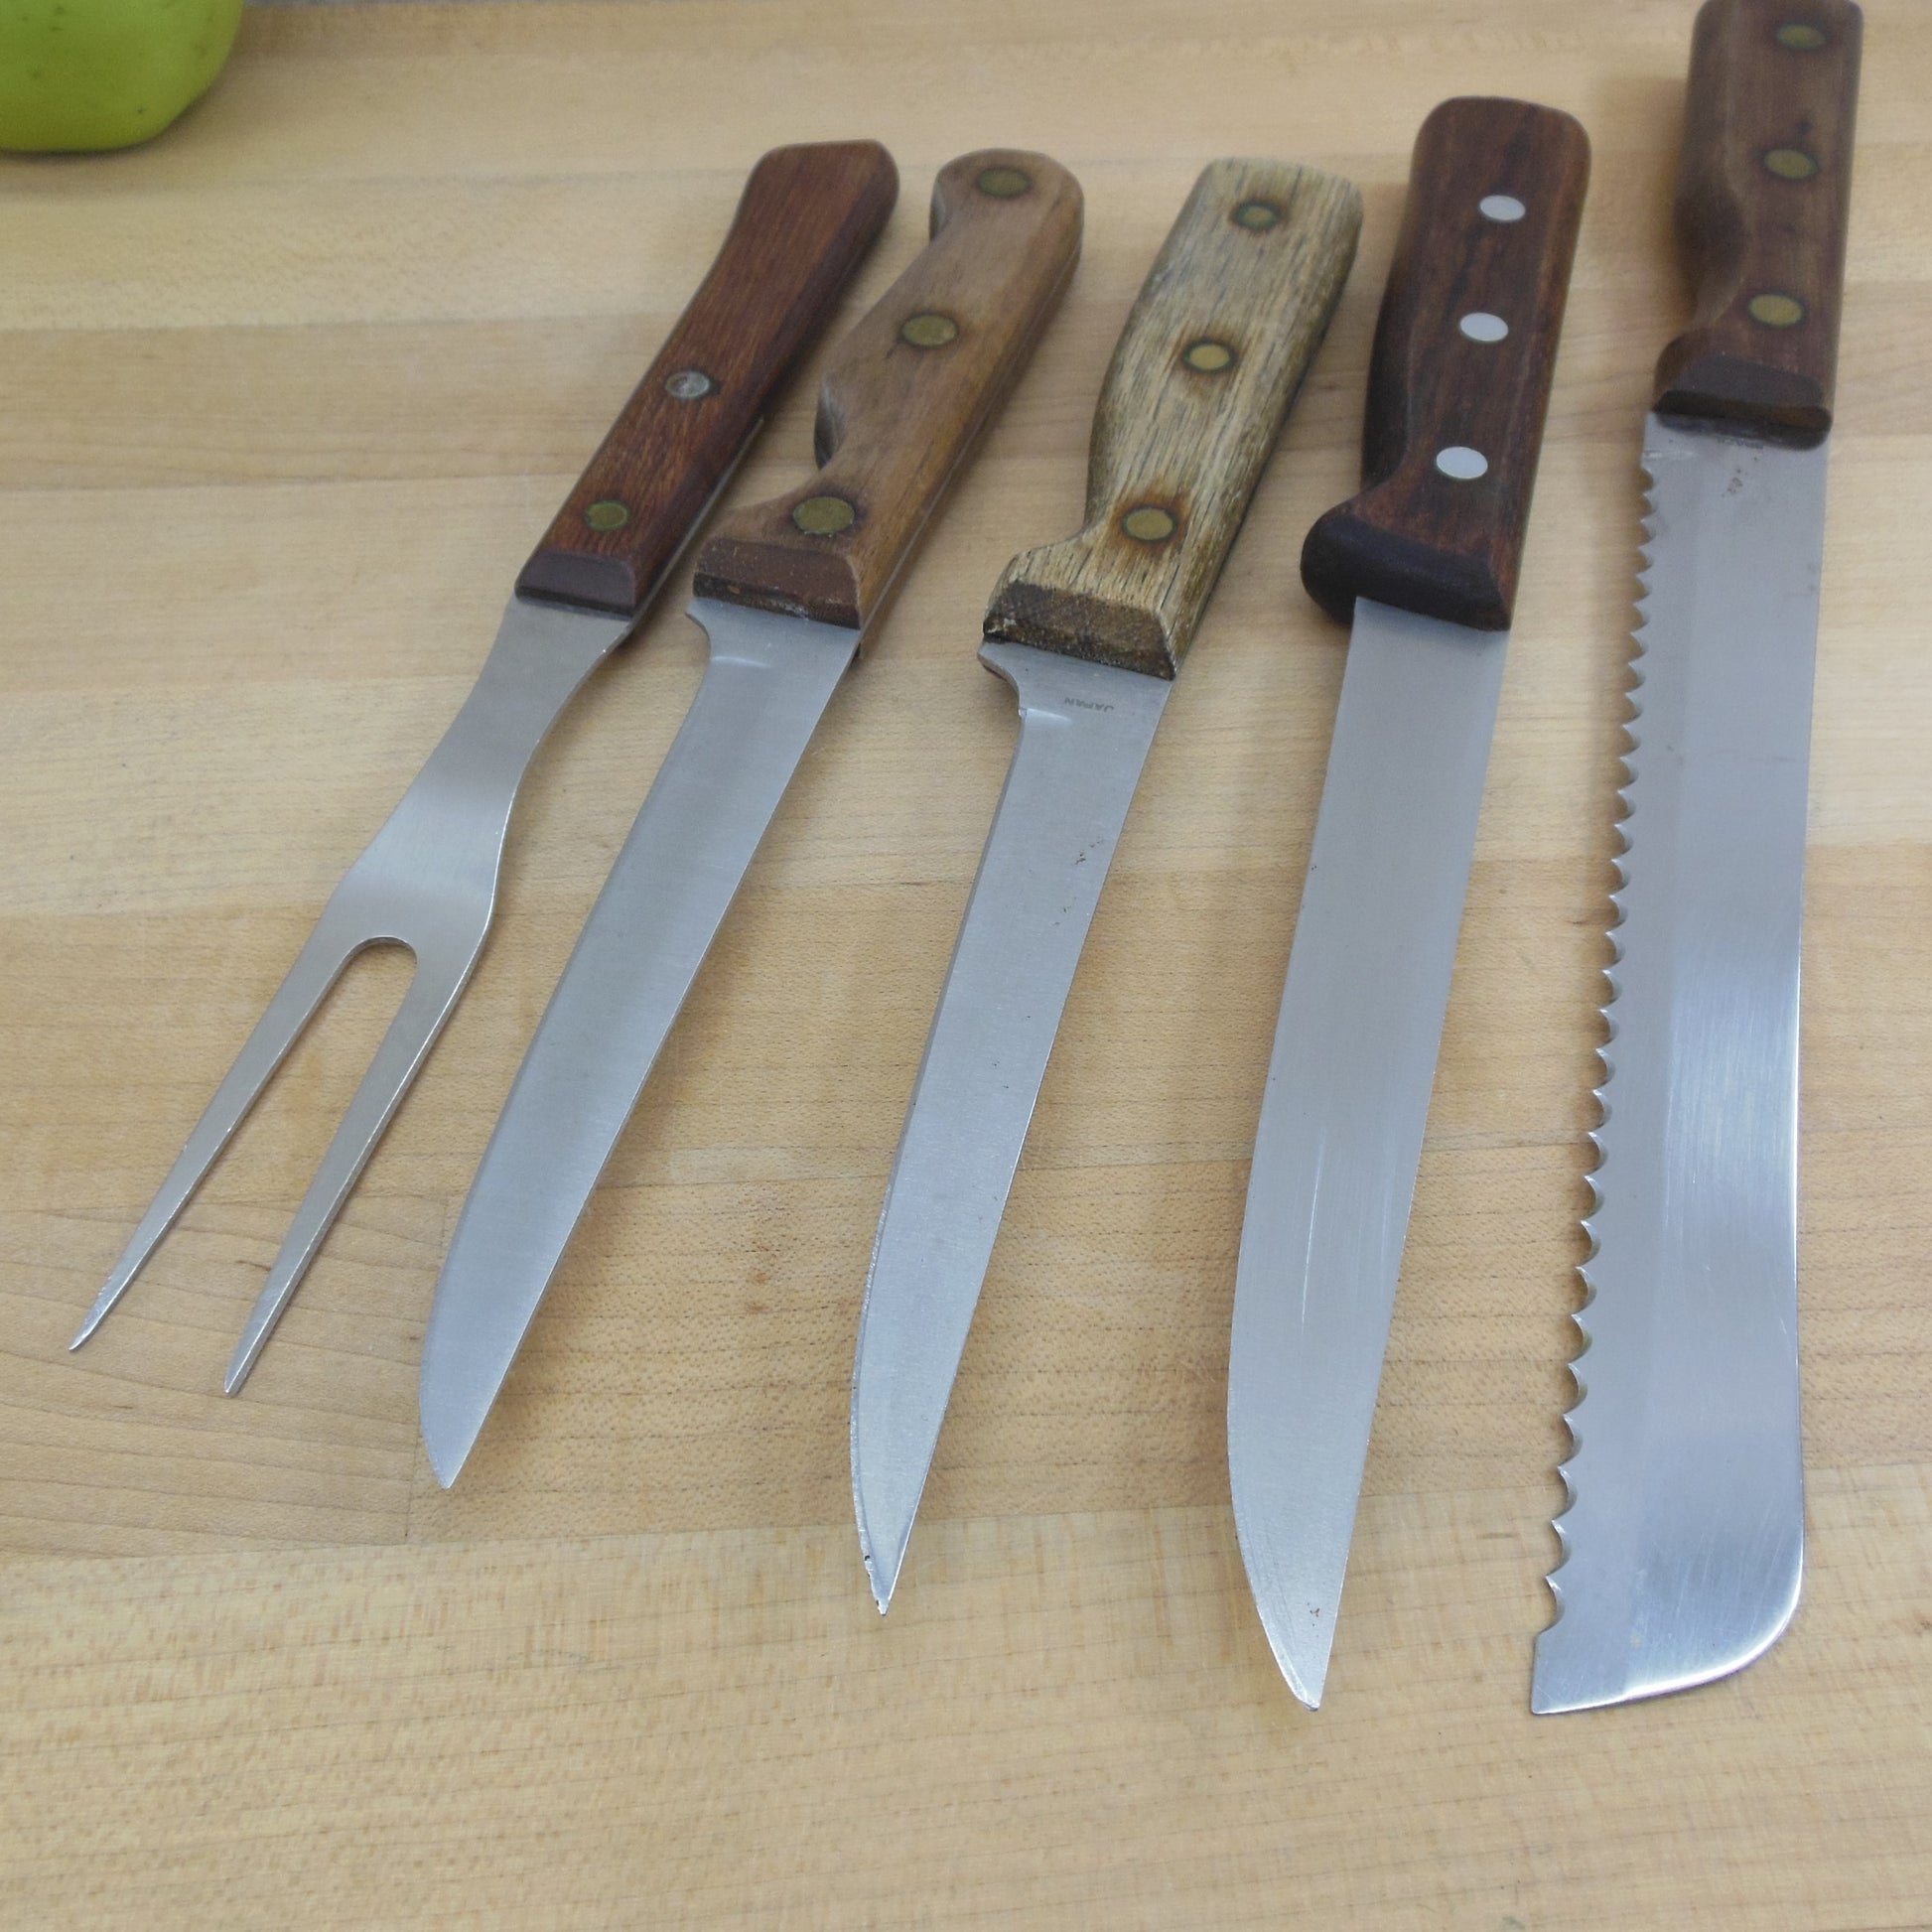 Stainless Wood Kitchen Knives Fork 5 Lot - Farberware Forschner Golden Eagle Yorktowne used